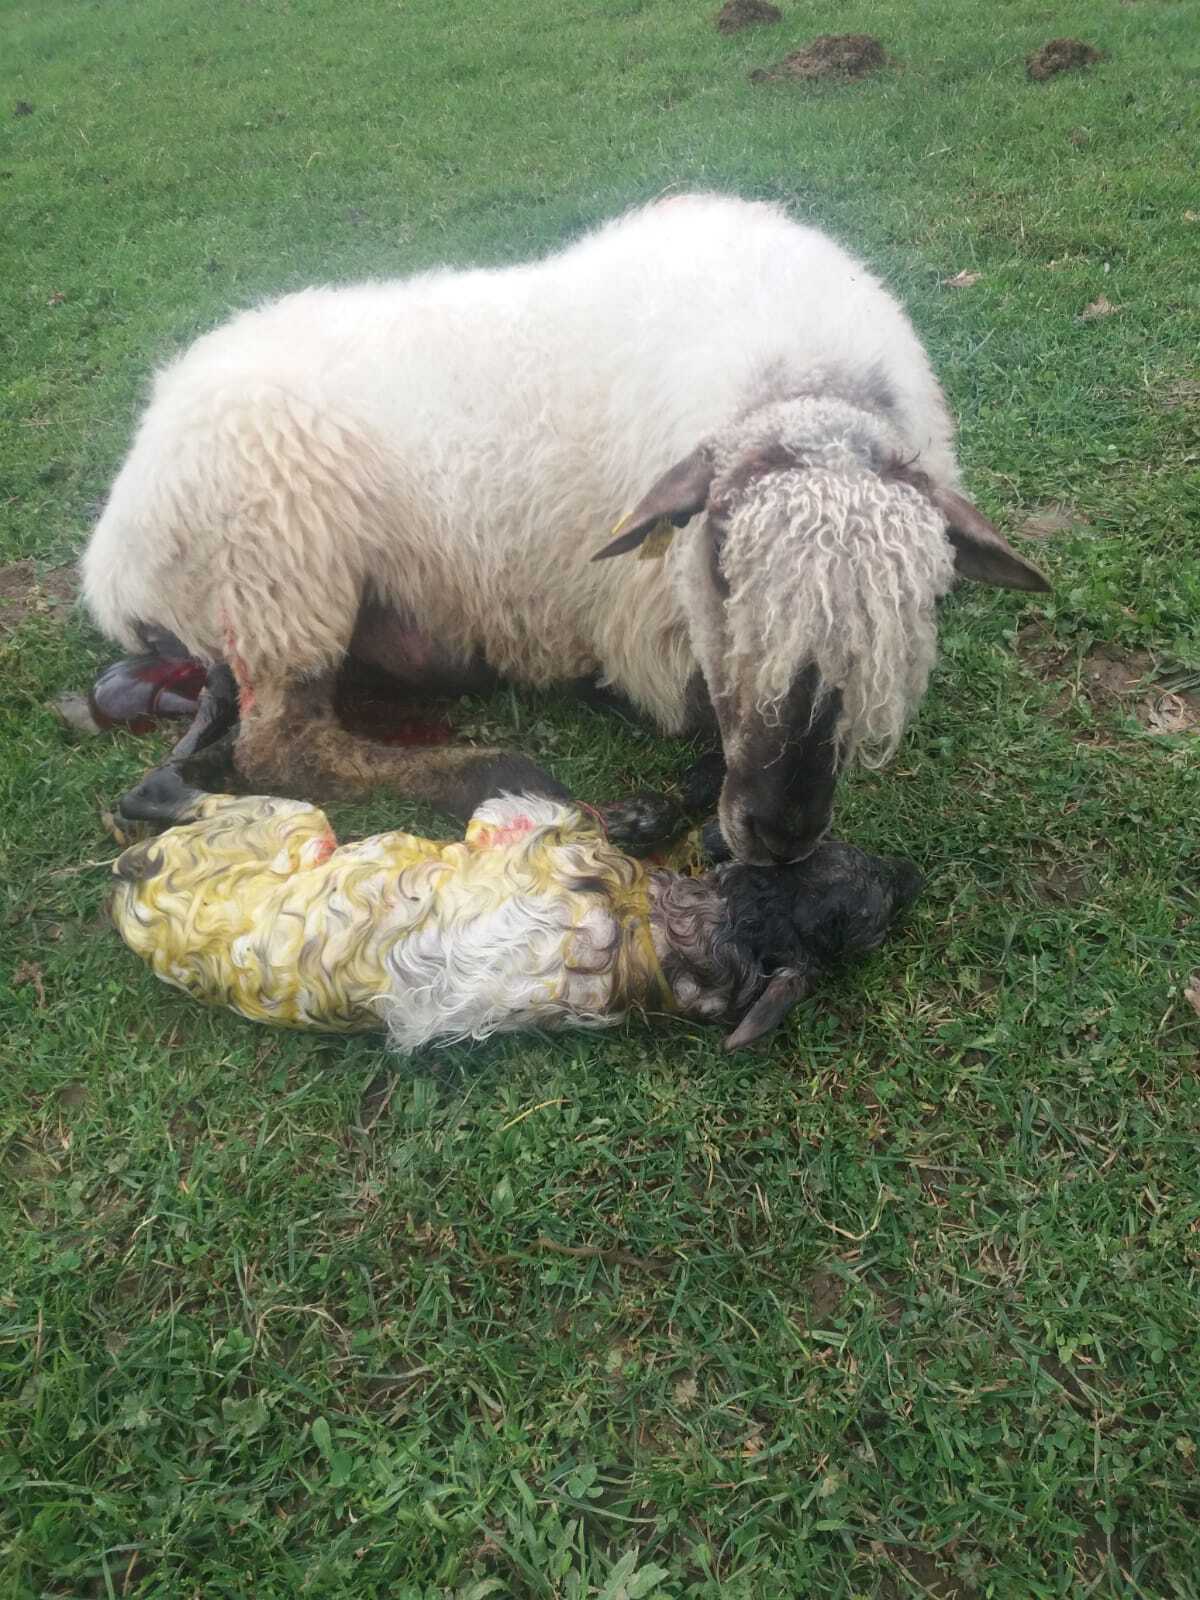 Adoption of unwanted lambs